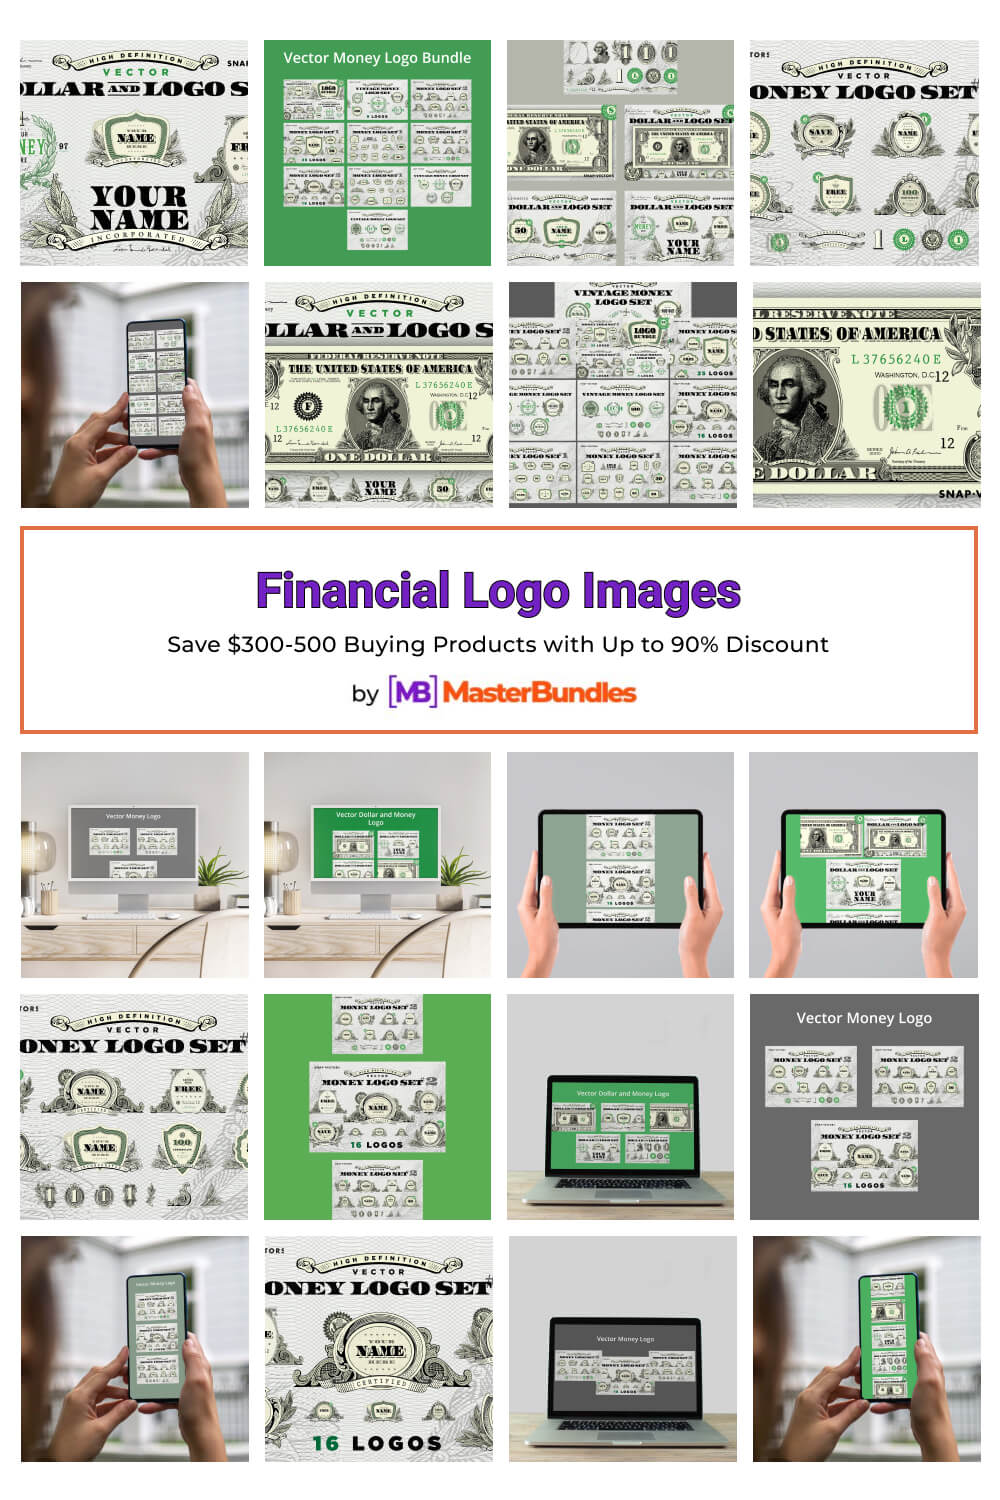 financial logo images pinterest image.